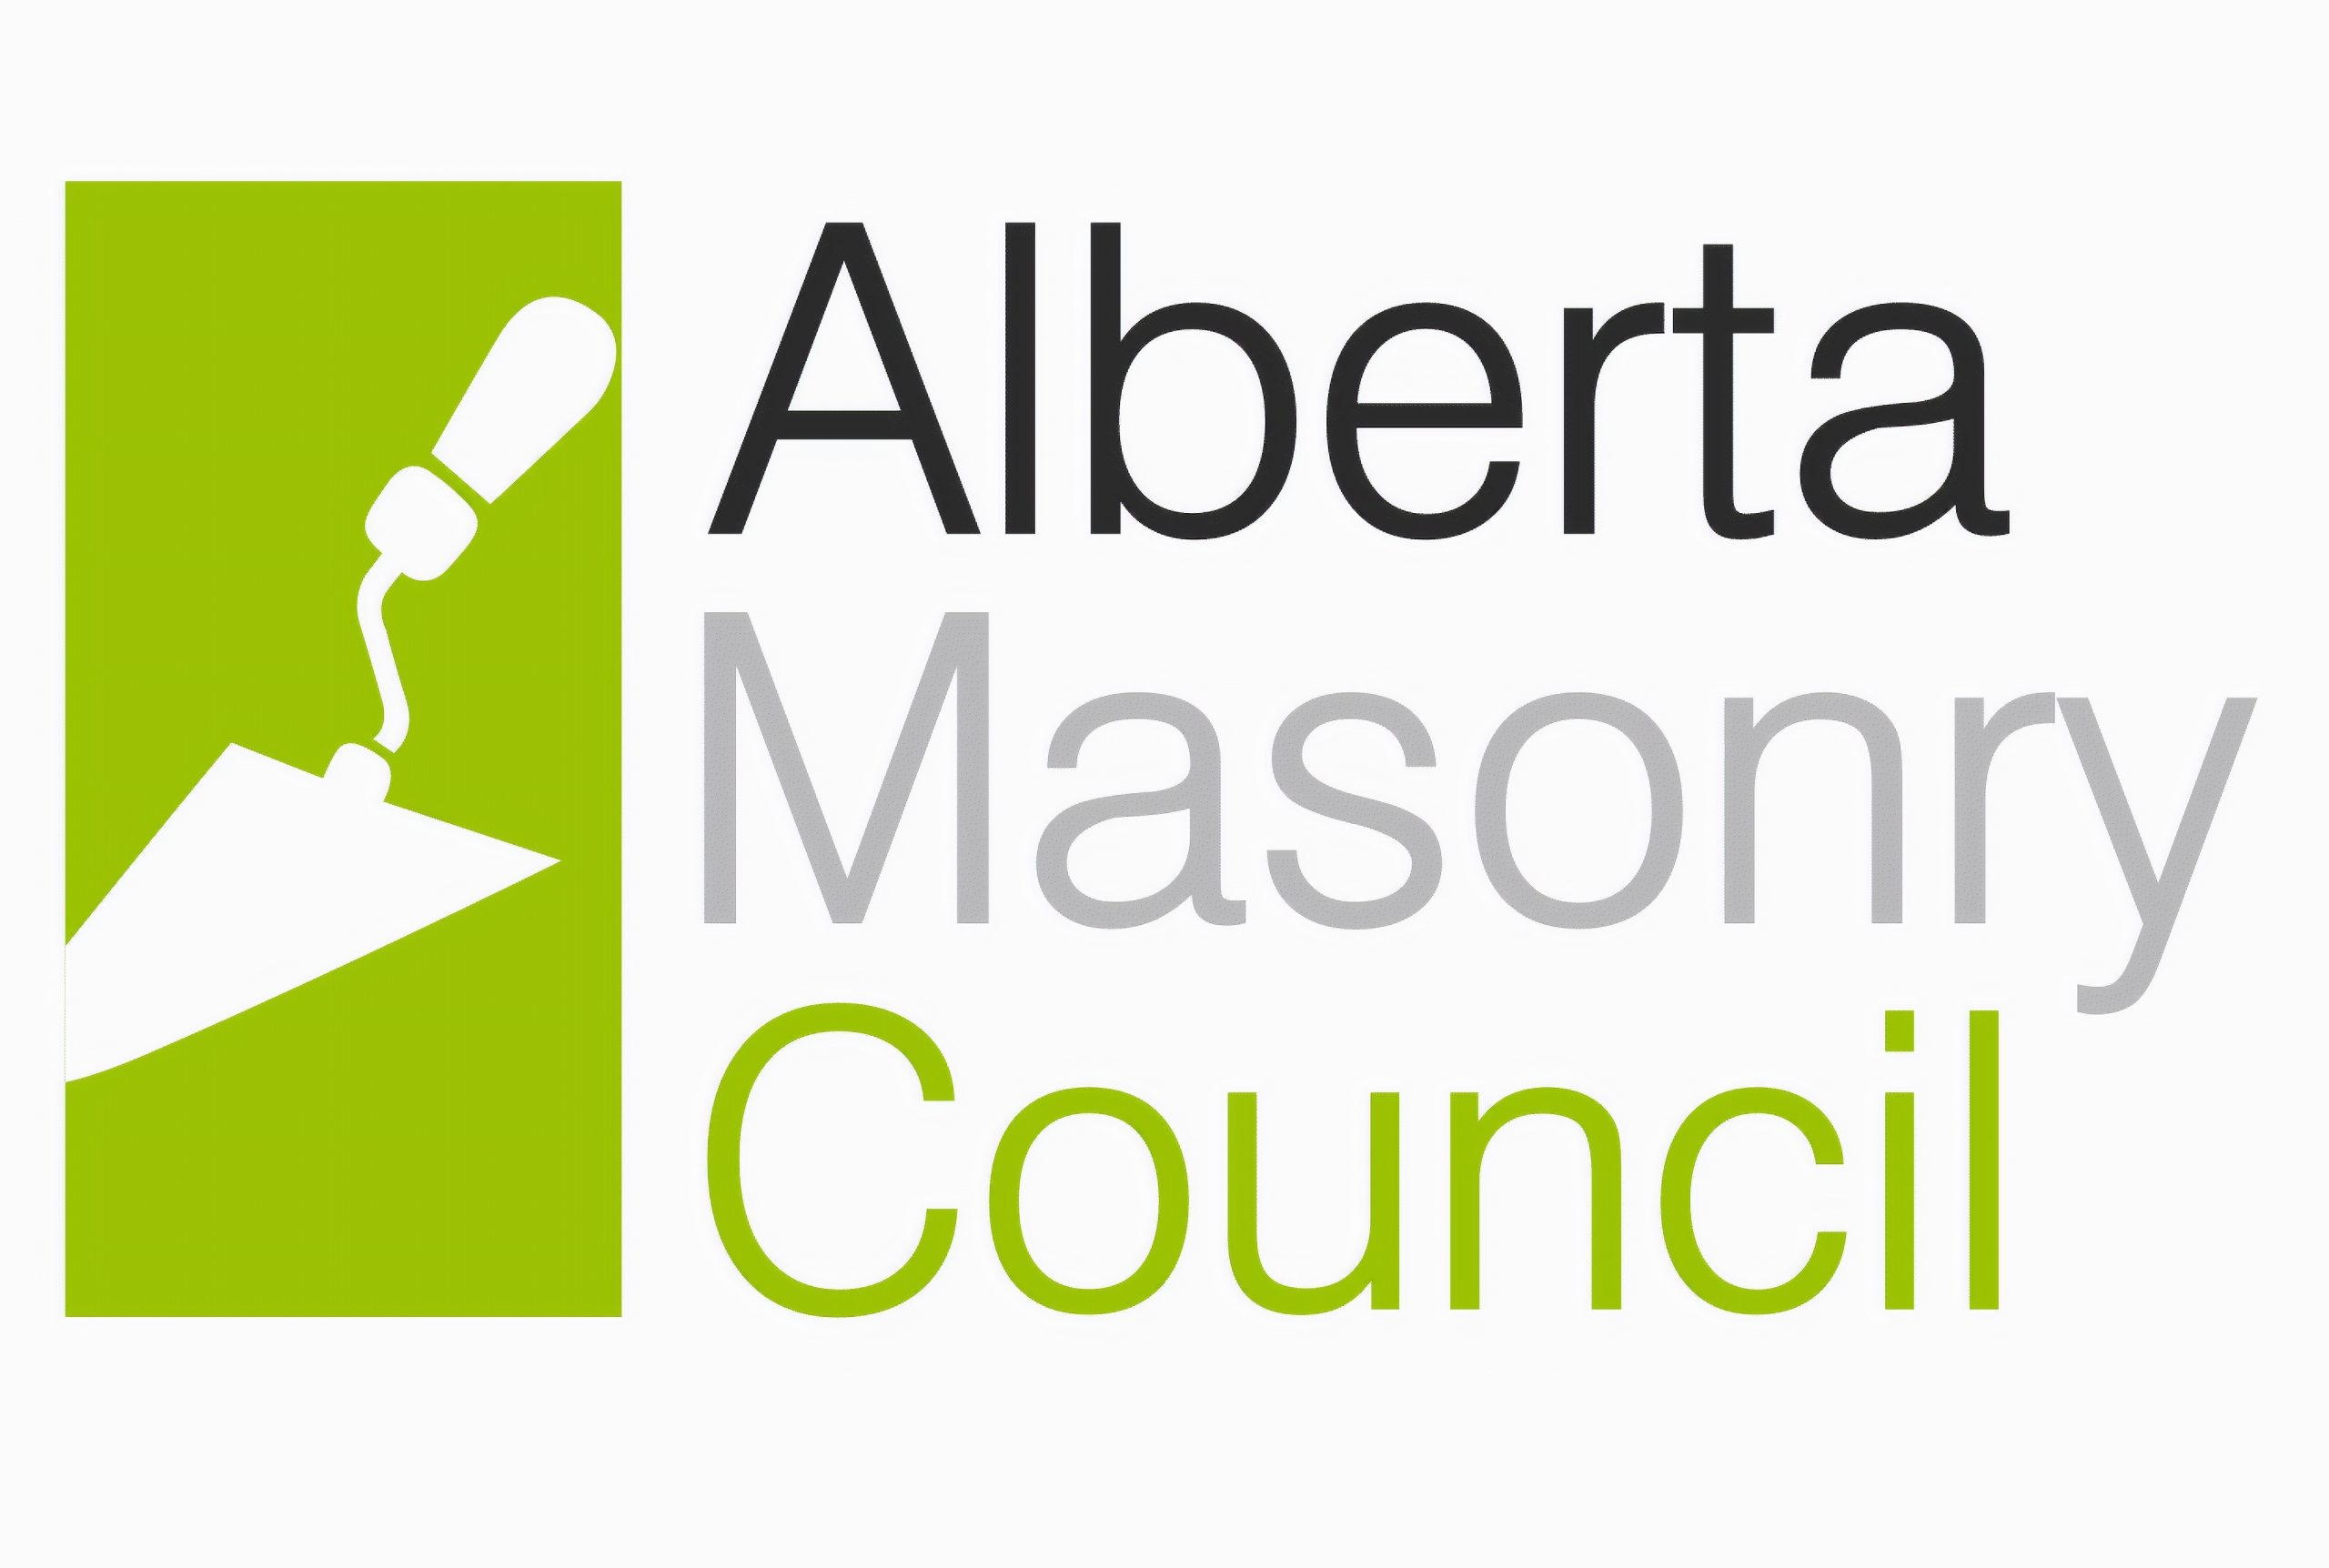 Alberta Masonry Council